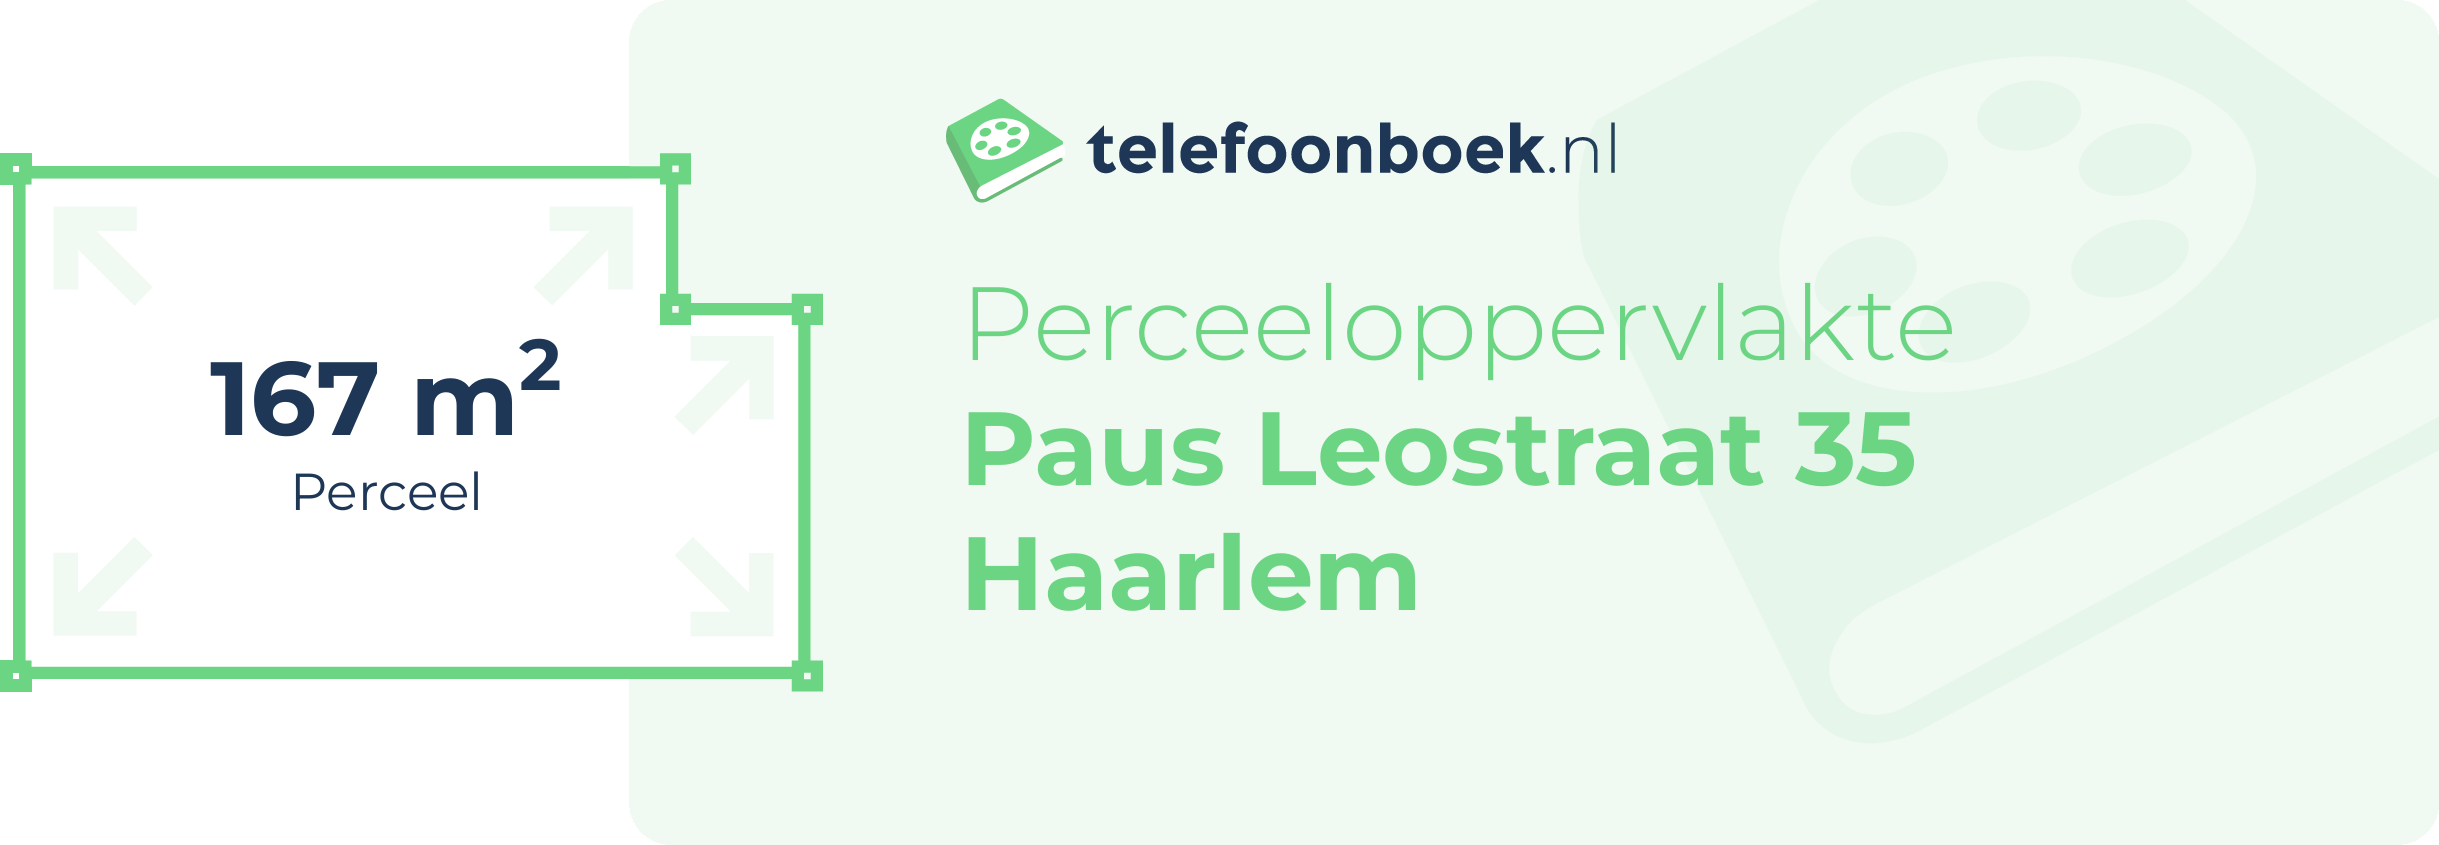 Perceeloppervlakte Paus Leostraat 35 Haarlem